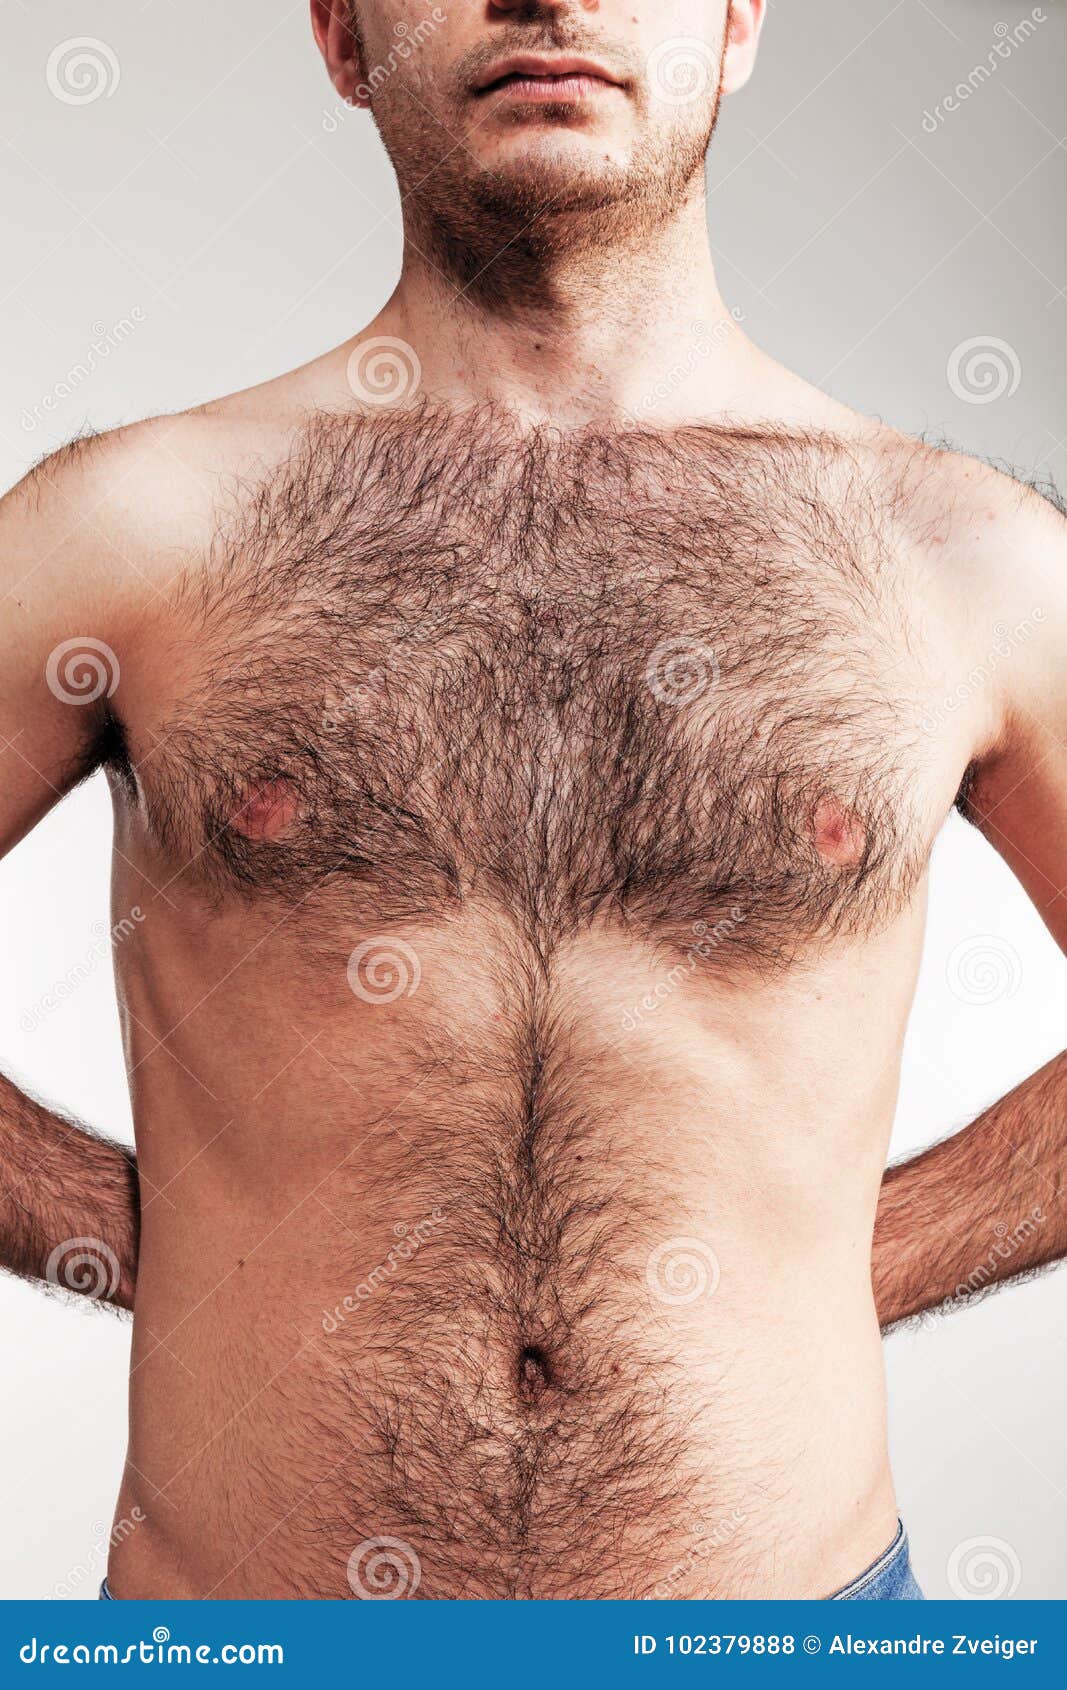 Beard, pit, and chest hair 😉 | Scrolller